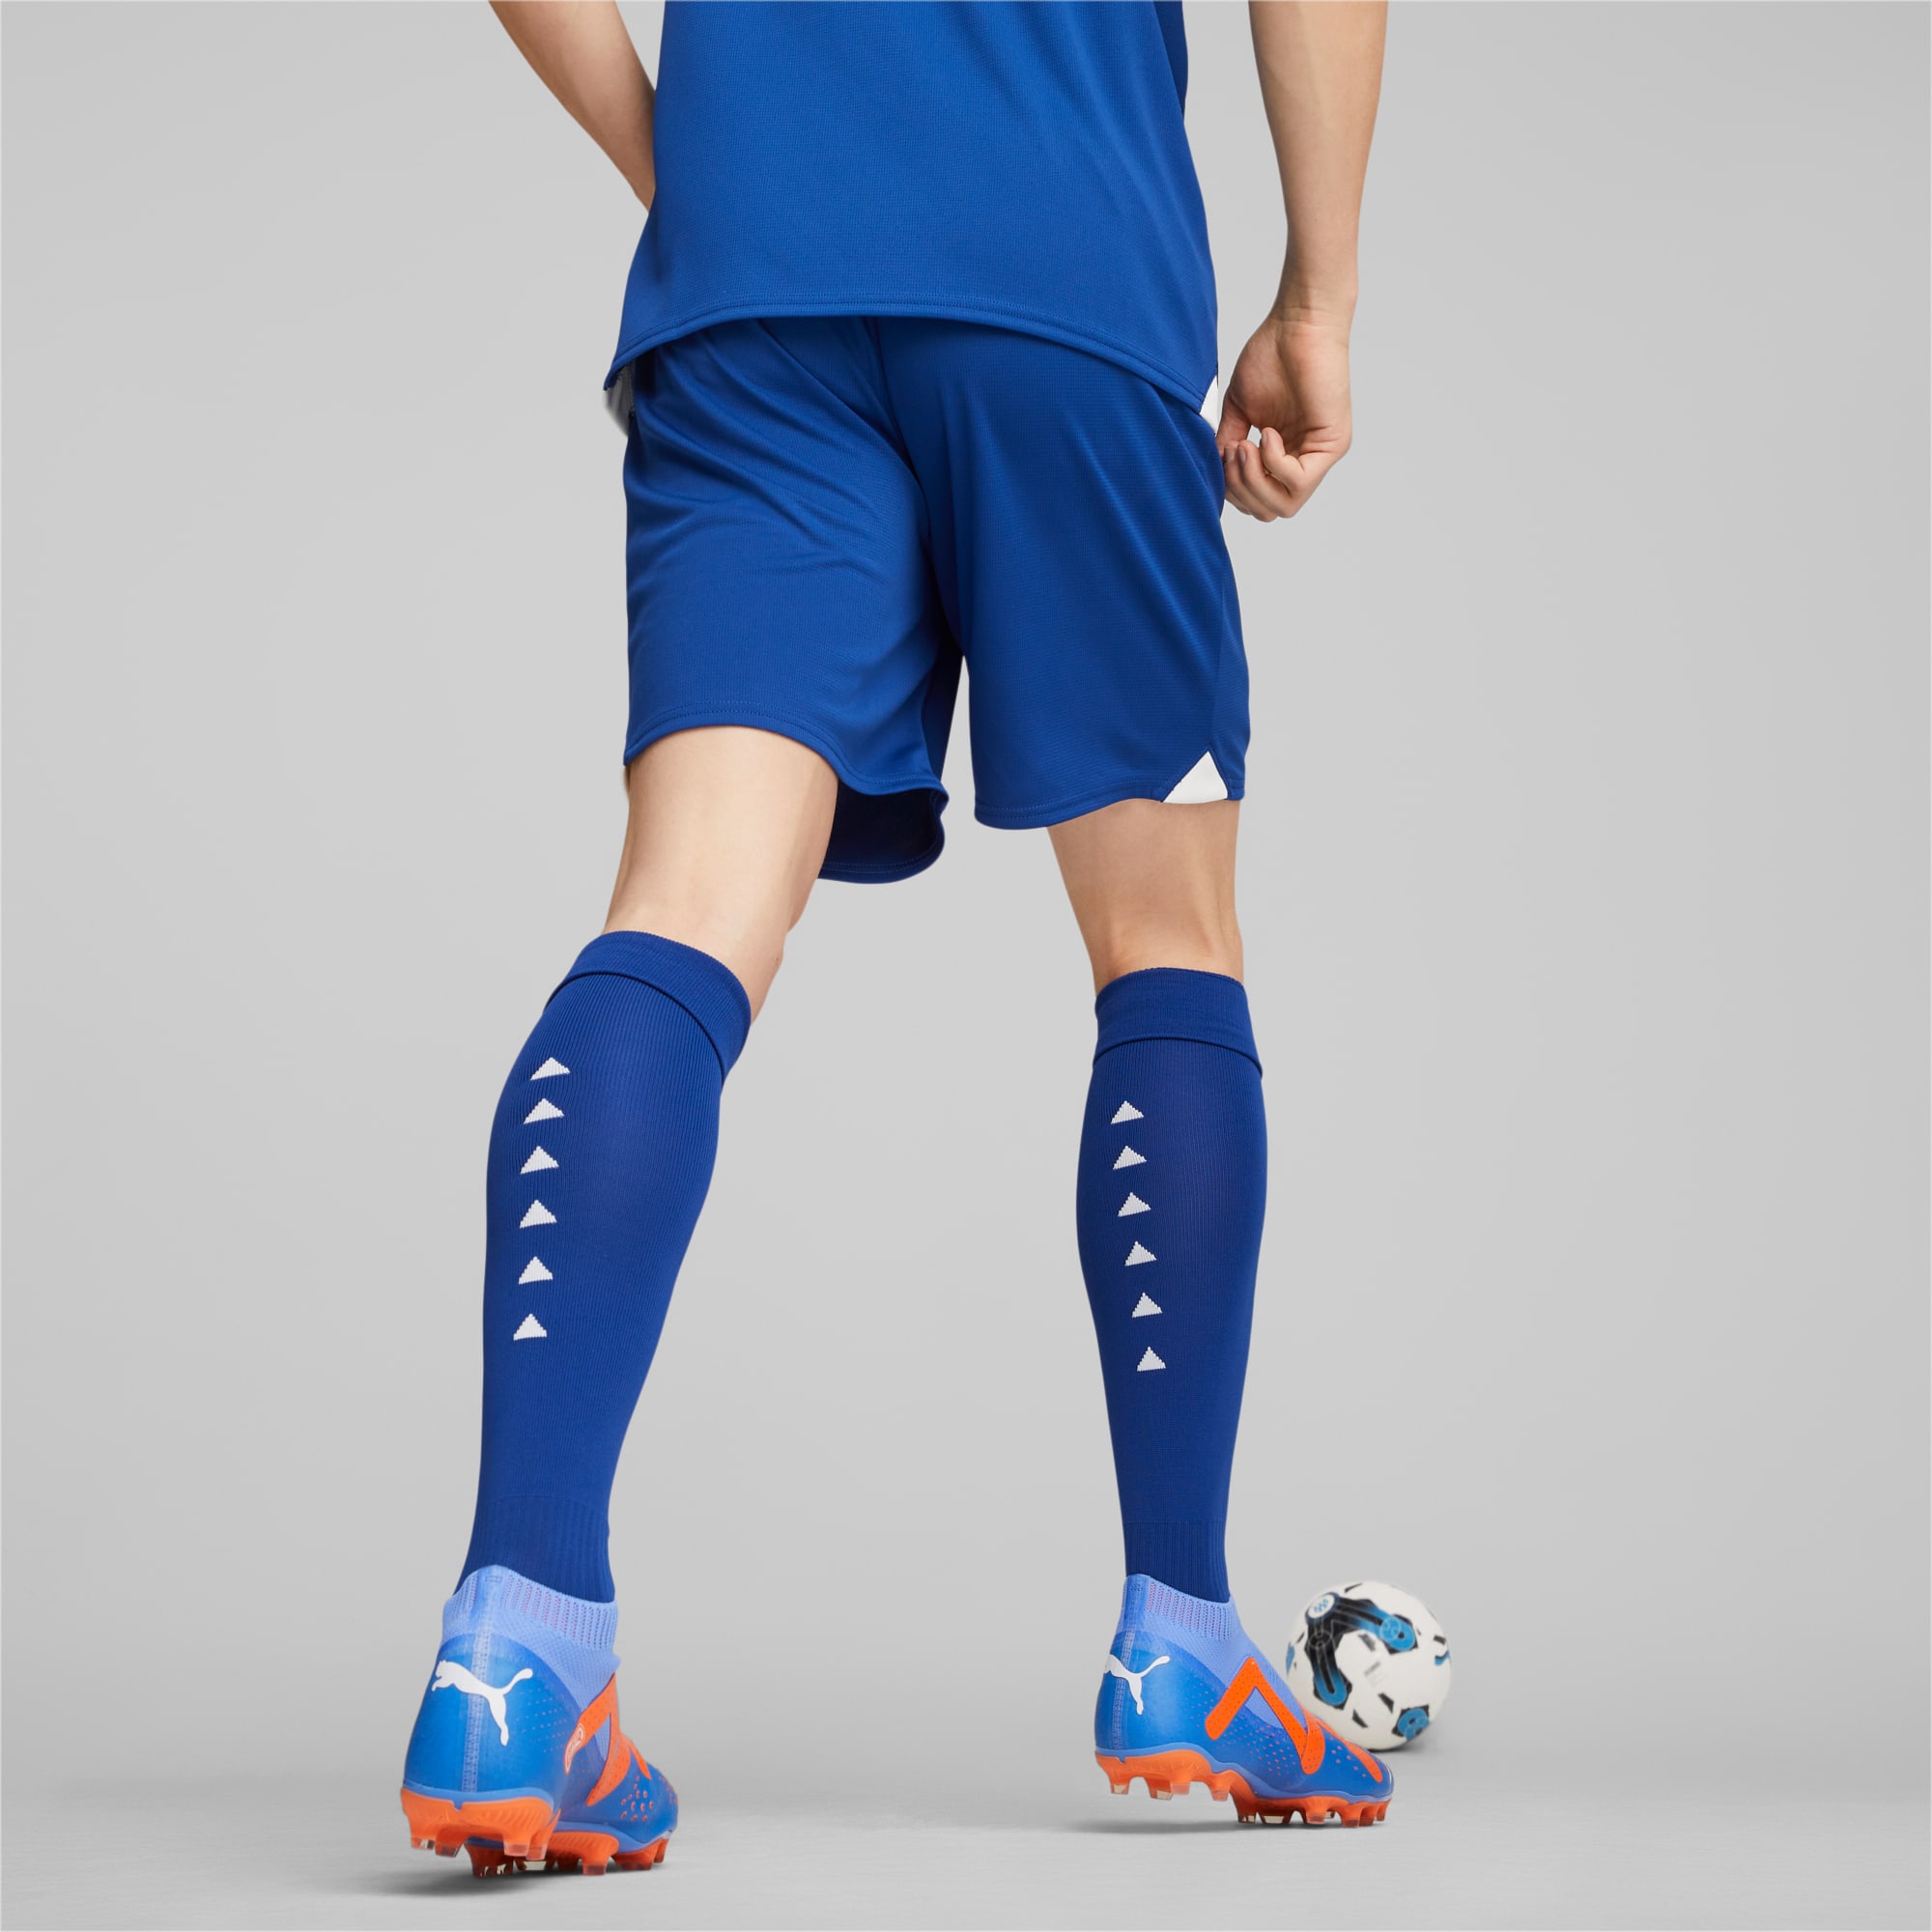 Men's PUMA Olympique De Marseille Football Shorts, Royal Blue, Size 3XL, Clothing